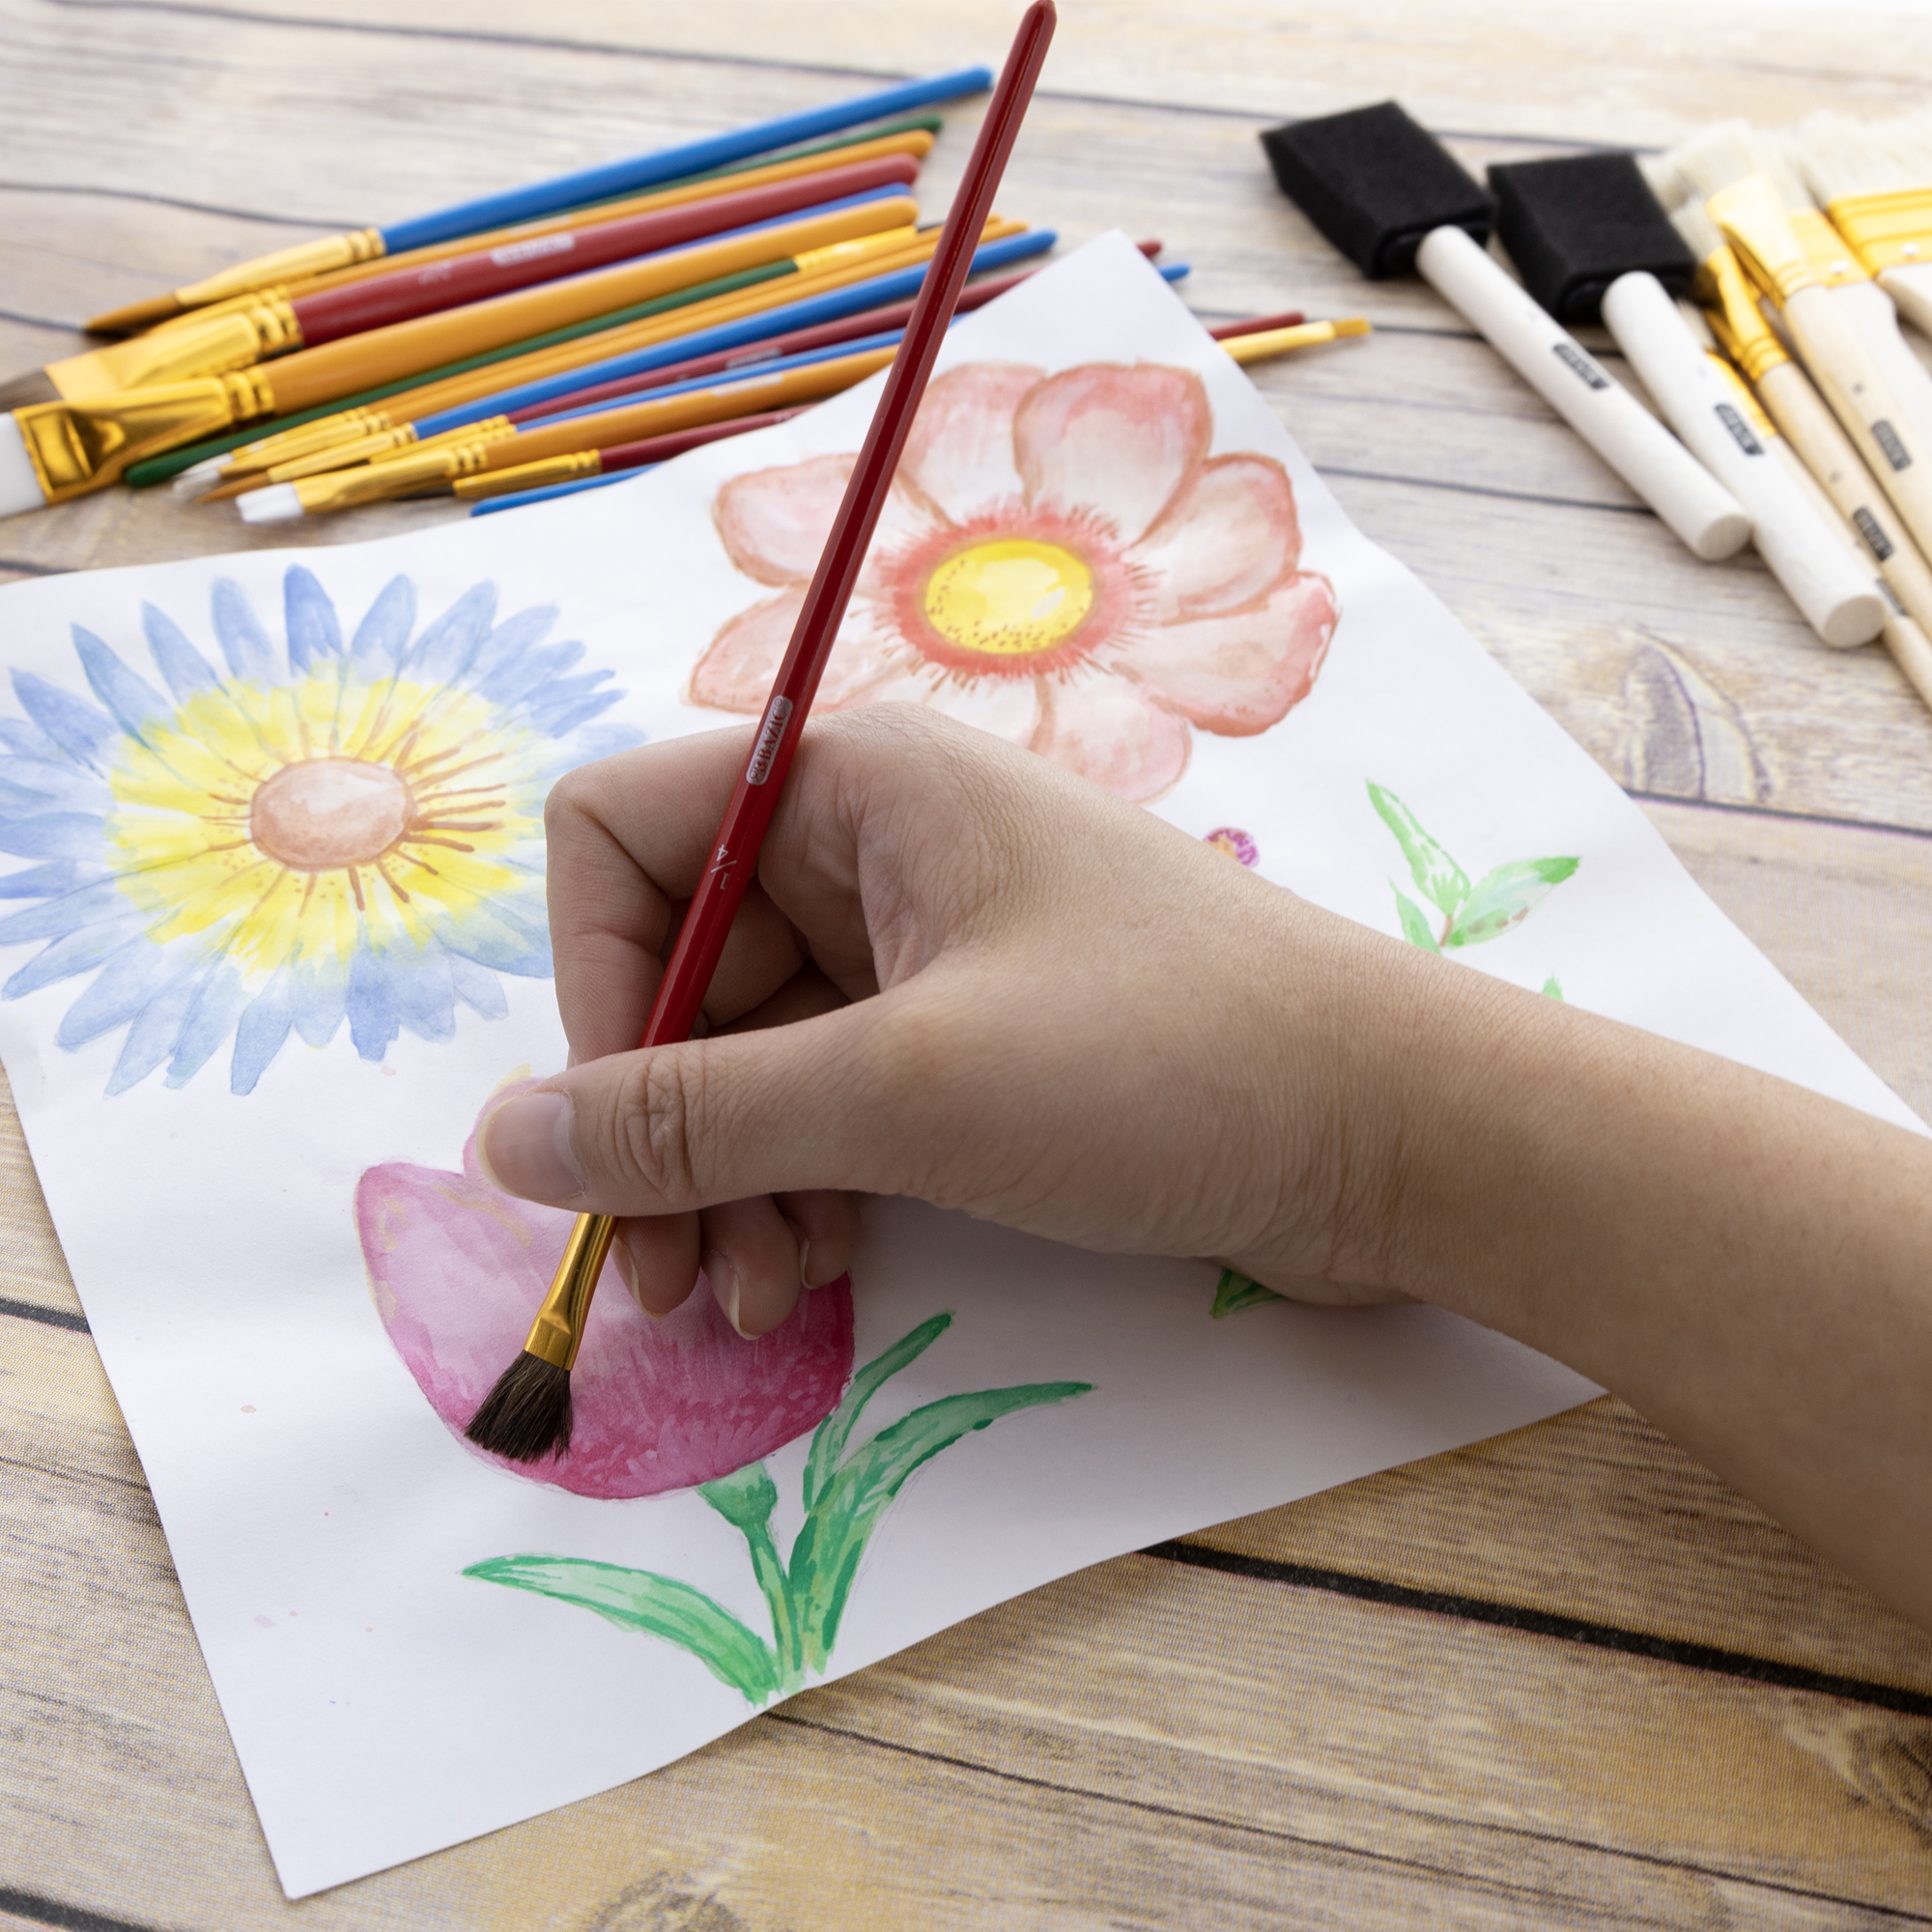 25-Piece Children's All Purpose Paint Brush Set, 6 Types, Flat, Round — TCP  Global